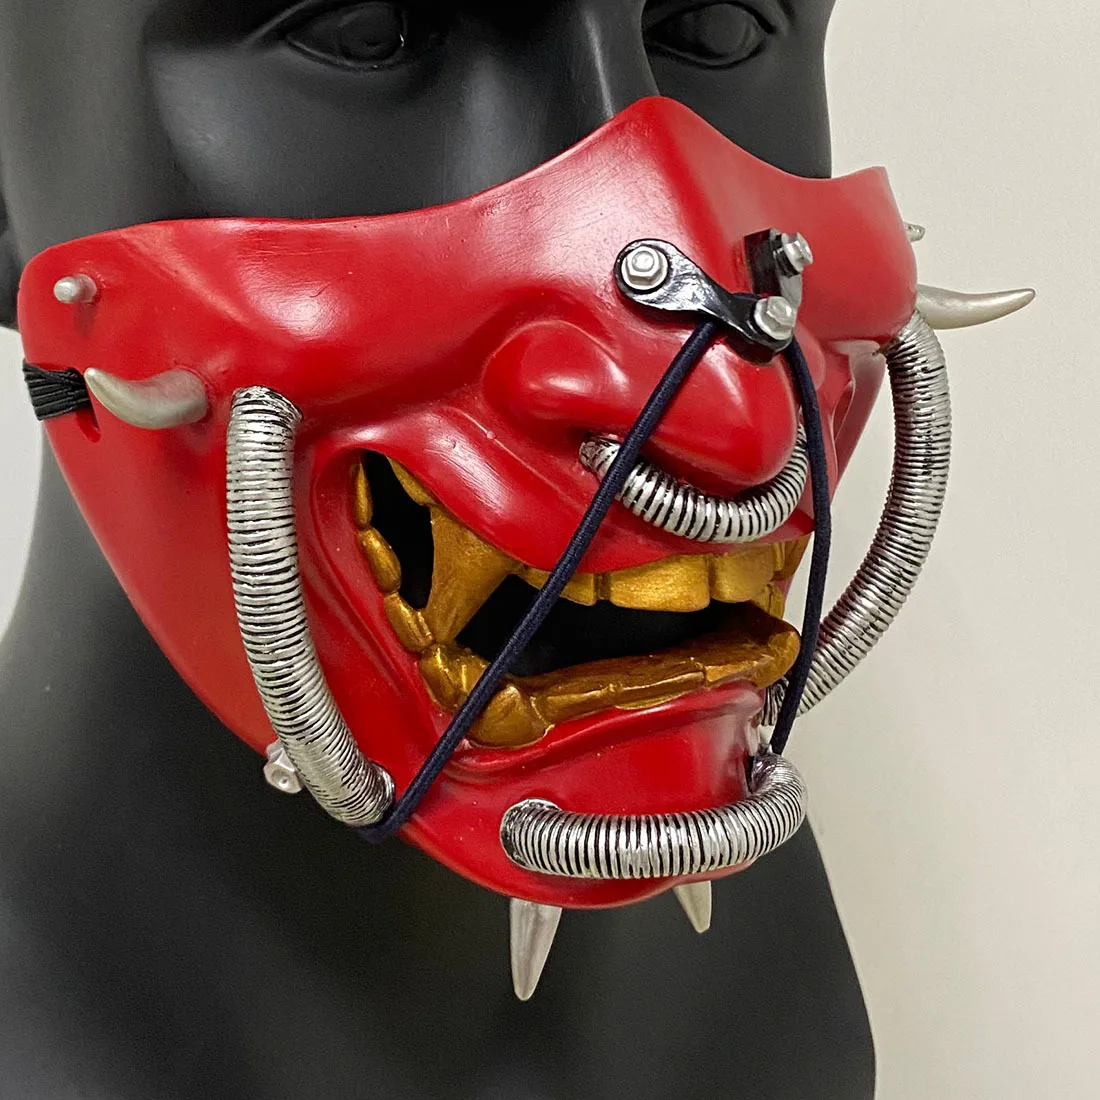 

New 2021 Prajna Heavenly Hound Mortal Kombat Sub-Zero Scorpion Cosplay PVC Masks Halloween Cos Role Play Costume Props